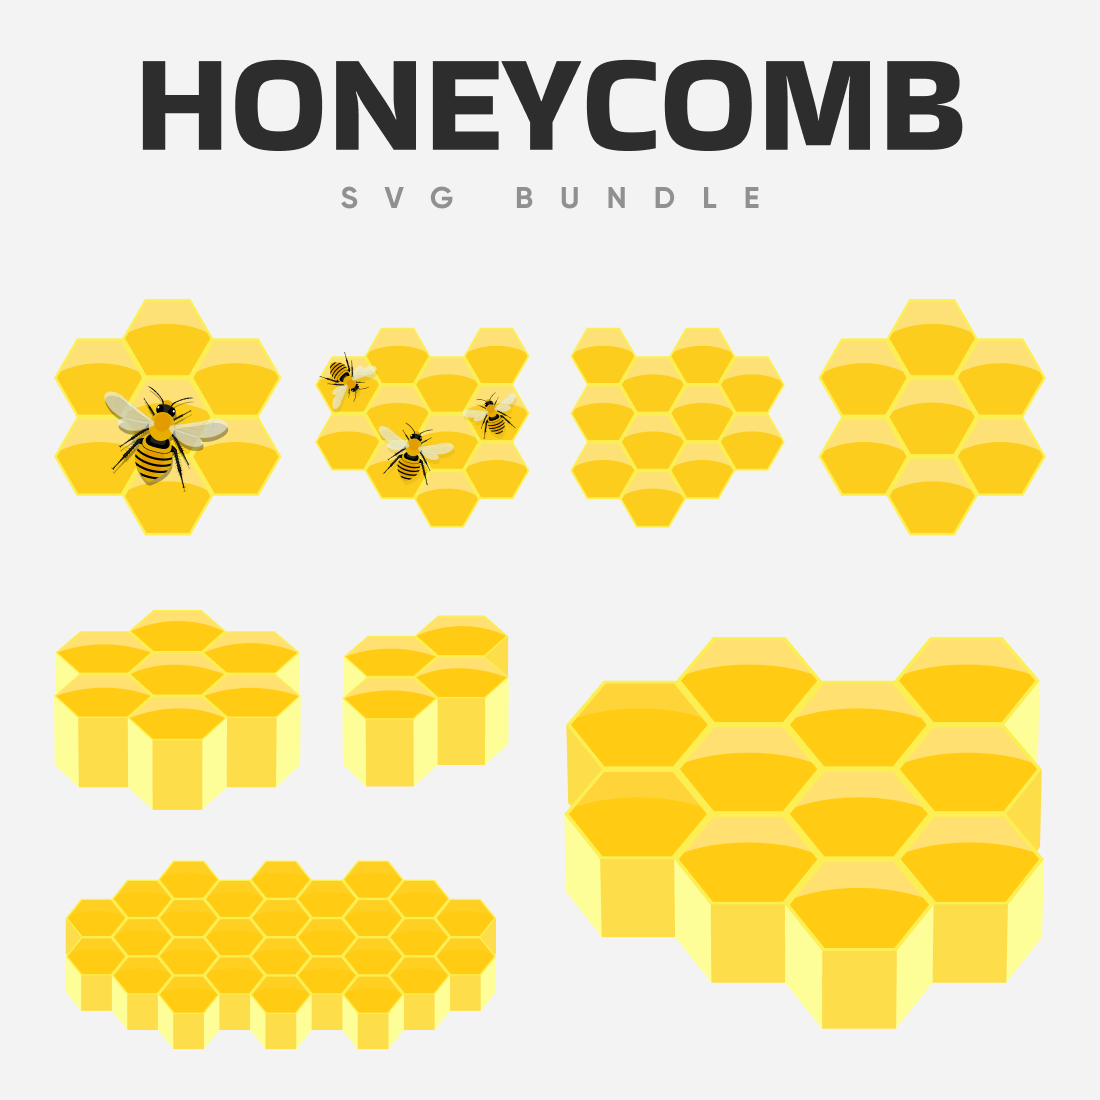 Sweet honeycomb SVG bundle.